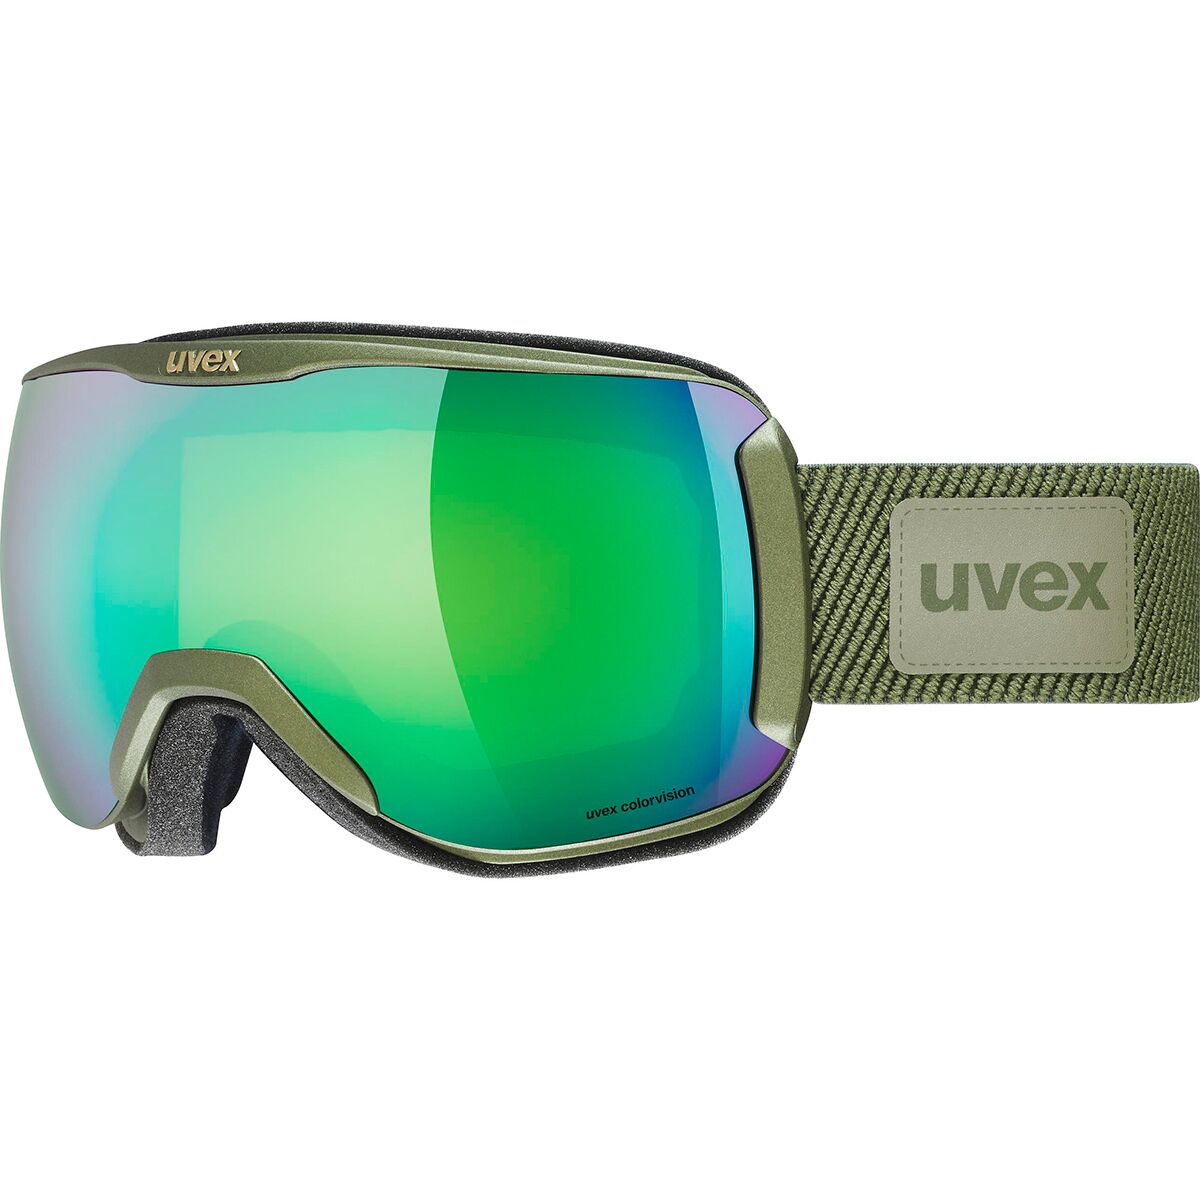 Uvex DH 2100 CV Planet Goggles